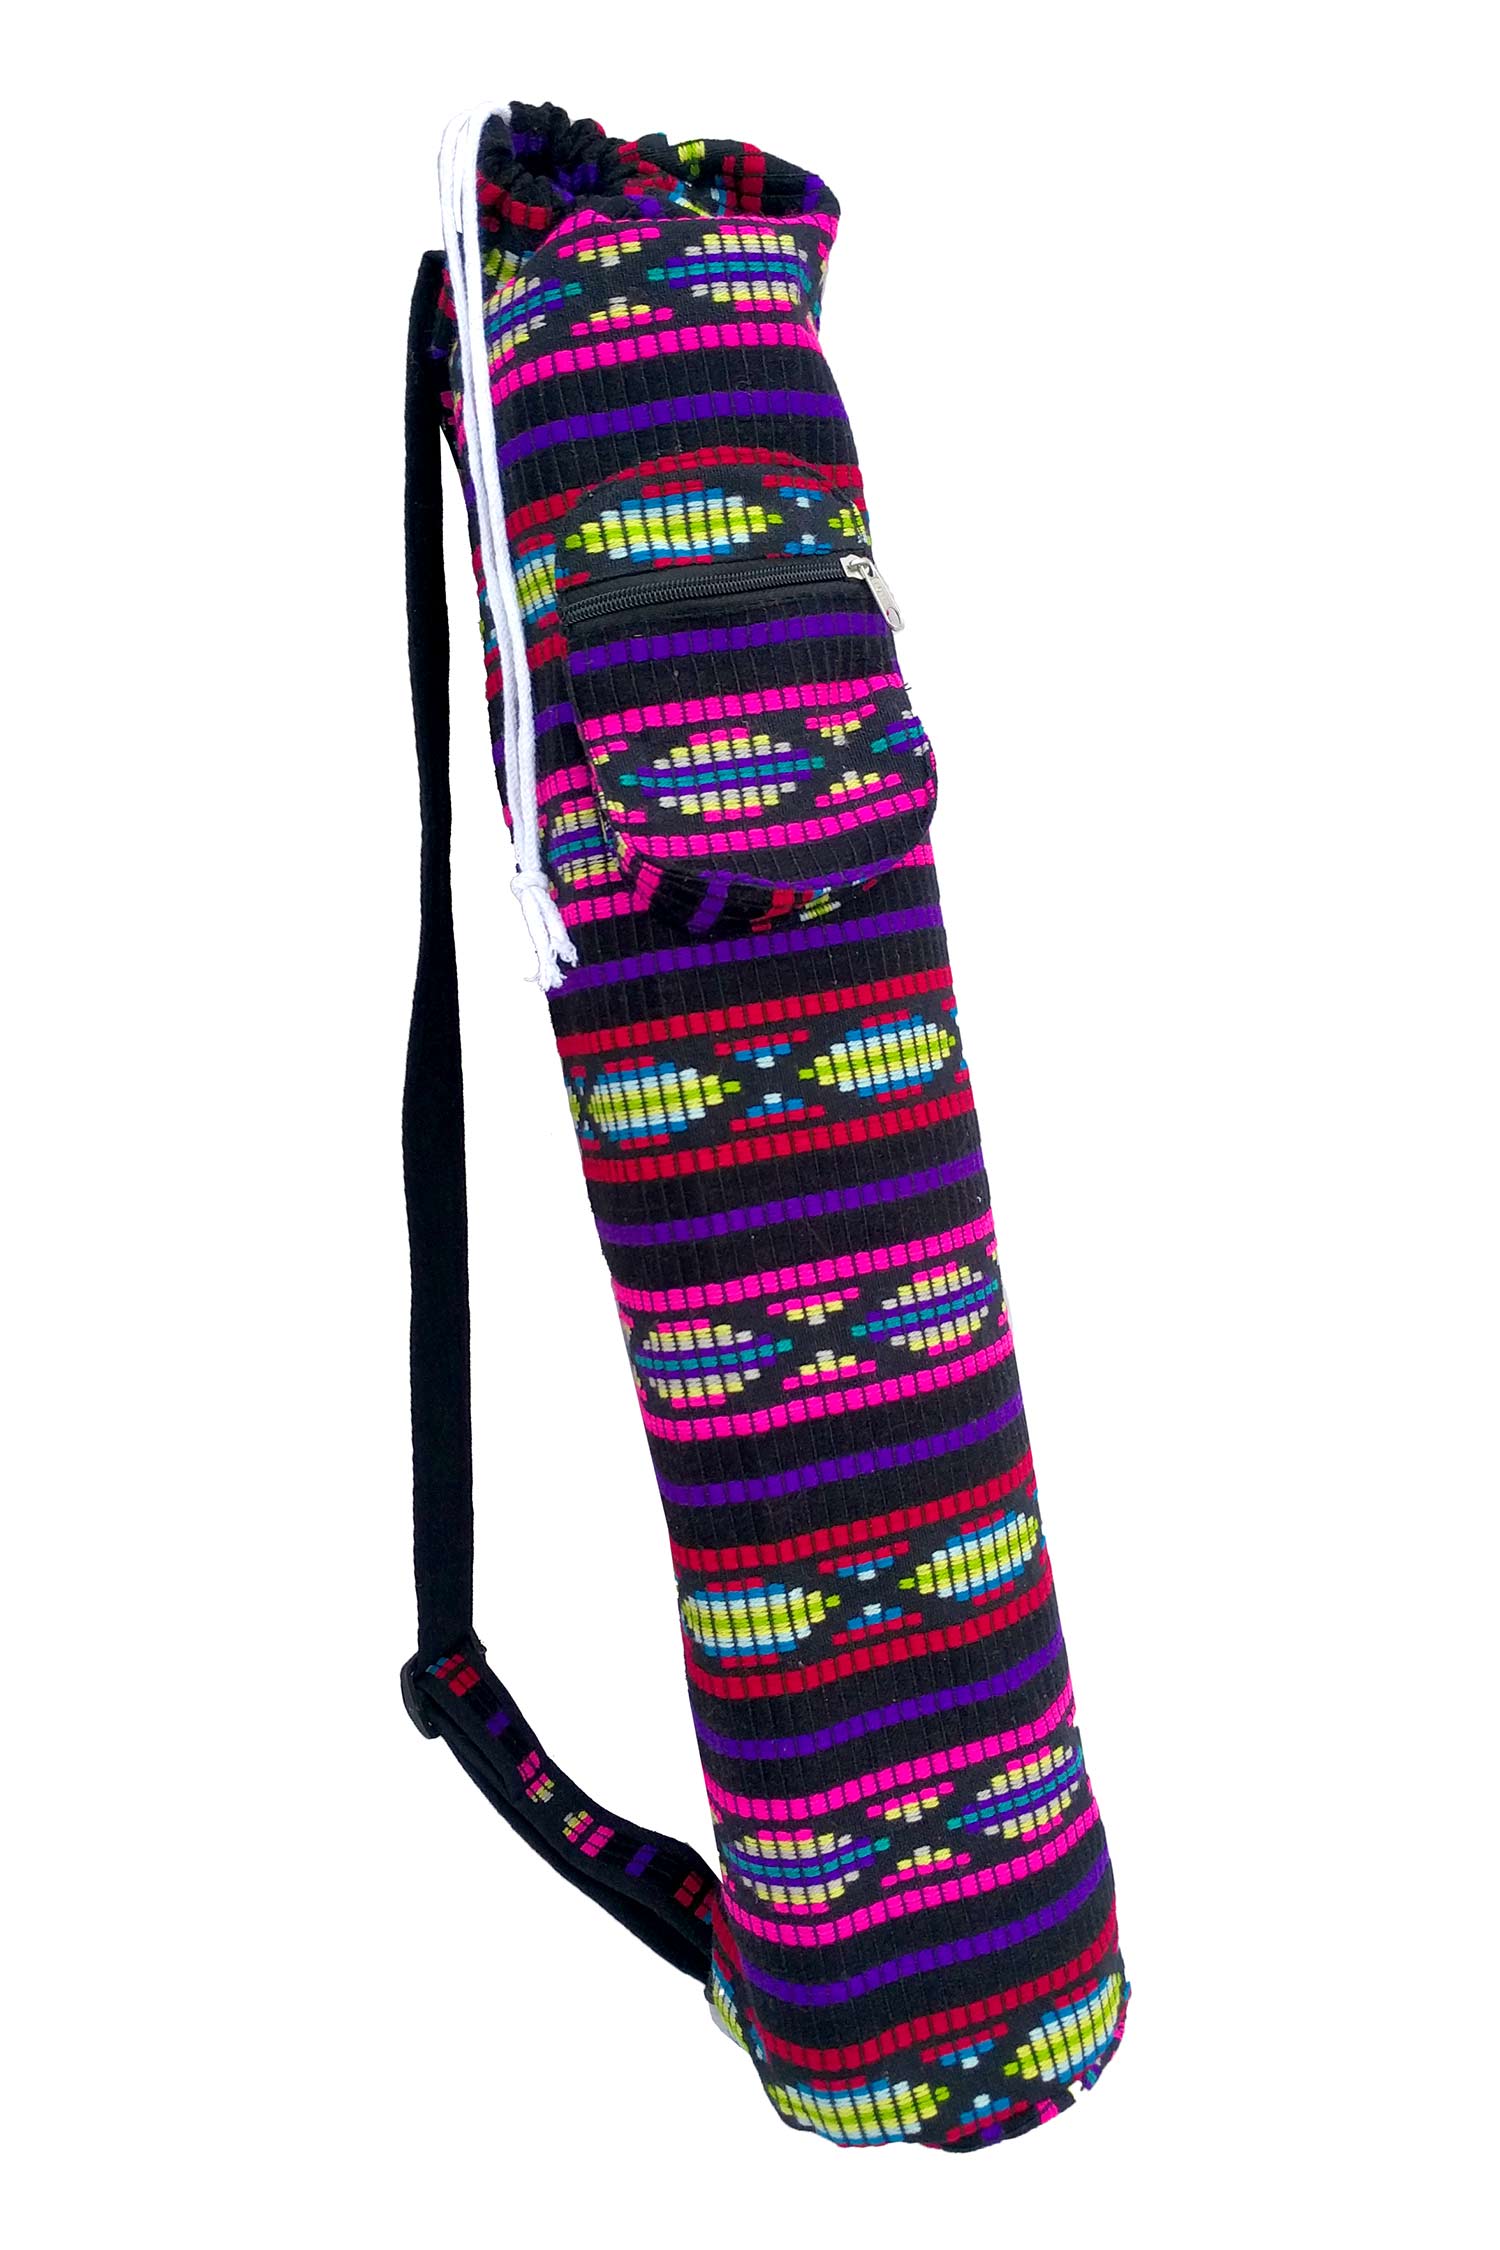 Hippy Yoga Bag, Colourful Embroidered Yoga Mat Bag